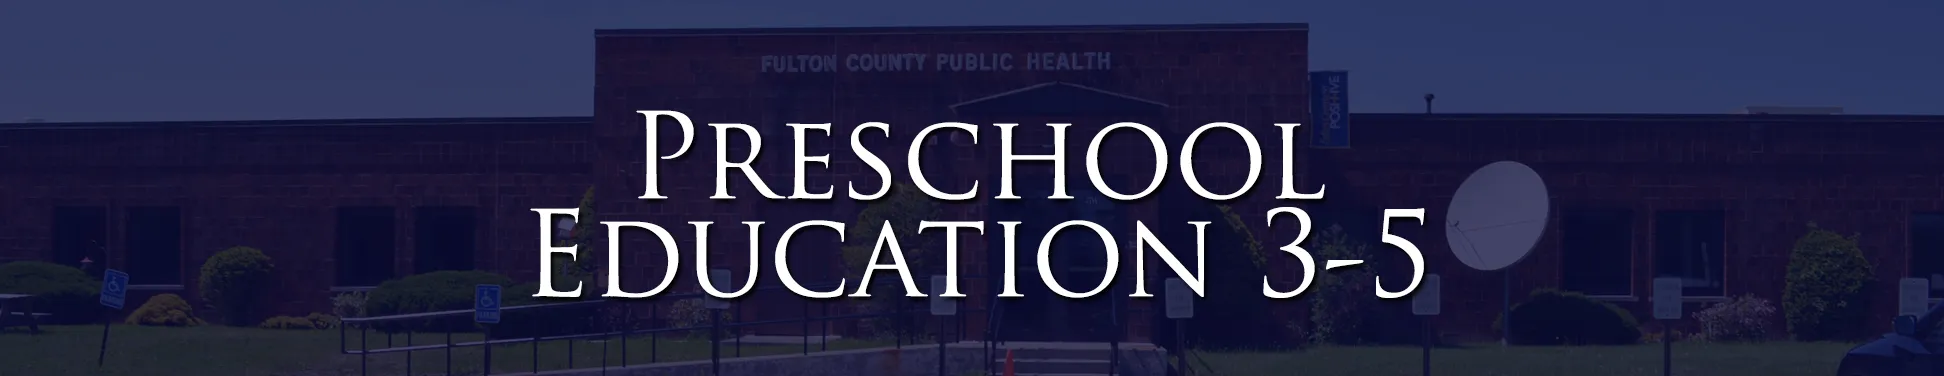 Public Health Preschool Education